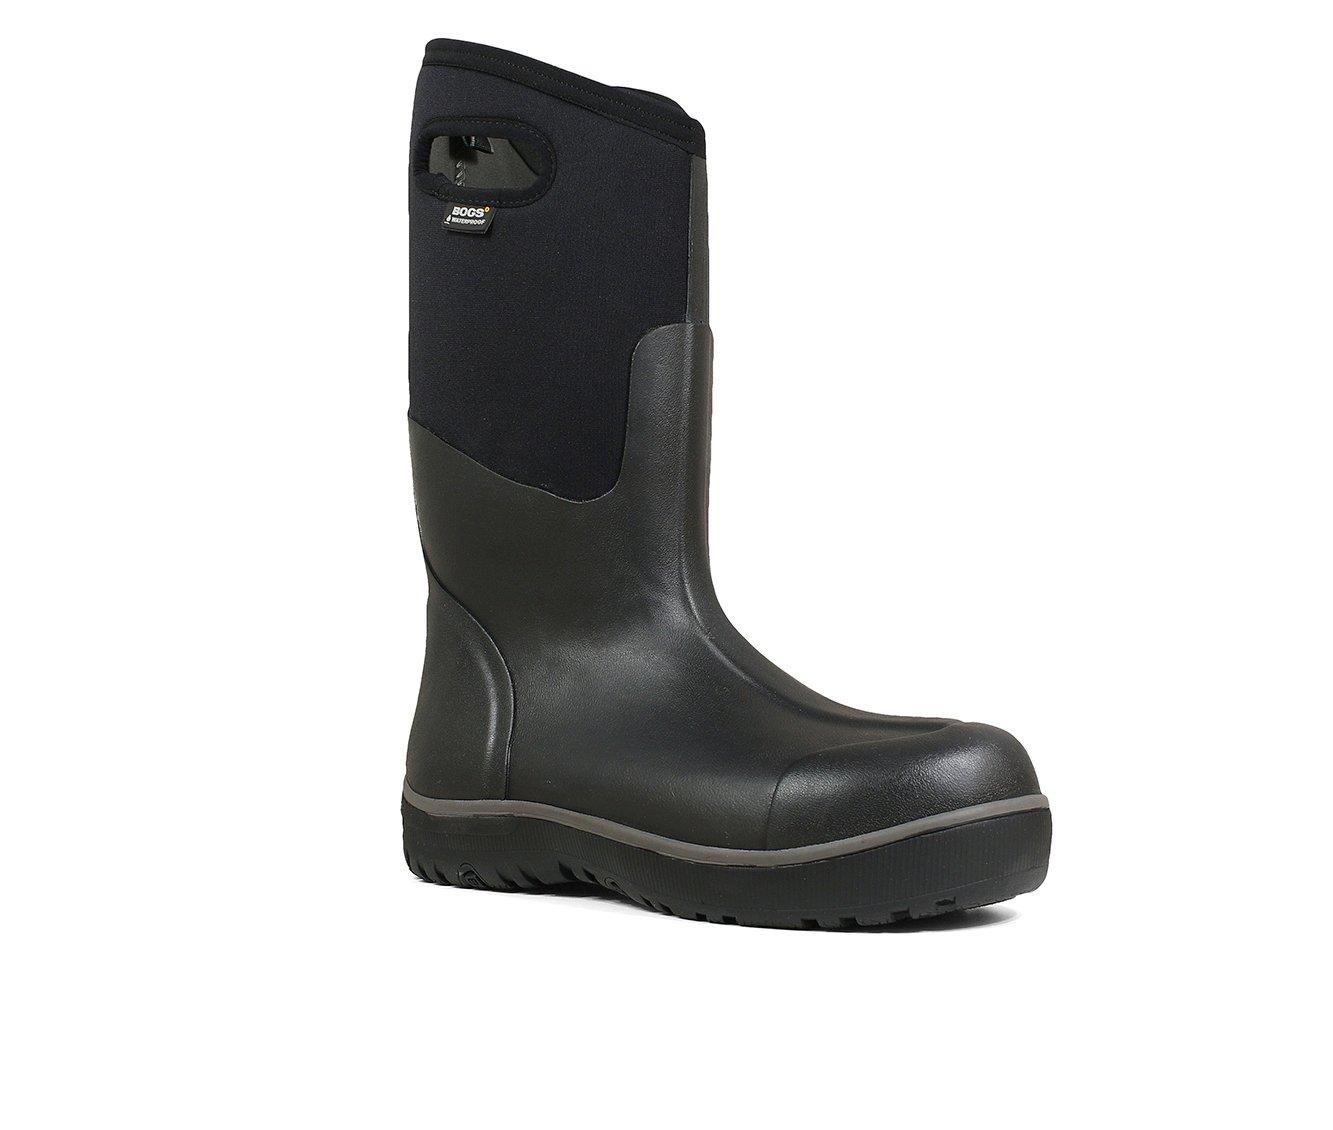 Men's Bogs Footwear Ultra High Waterproof Insulated Boots